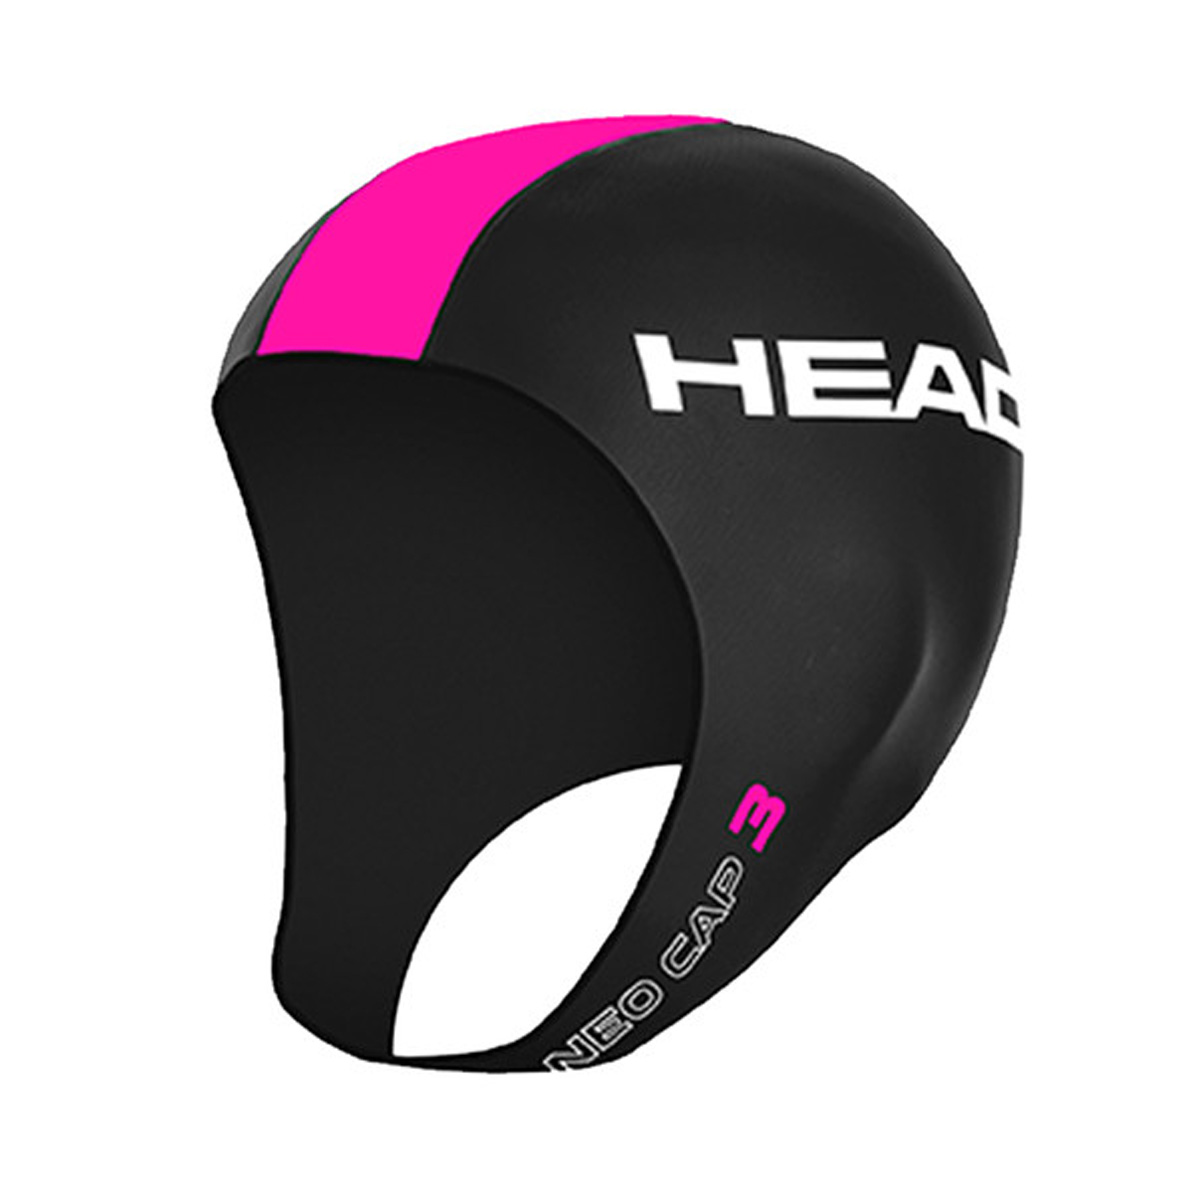 Head Neo Cap 3 - Black / Pink